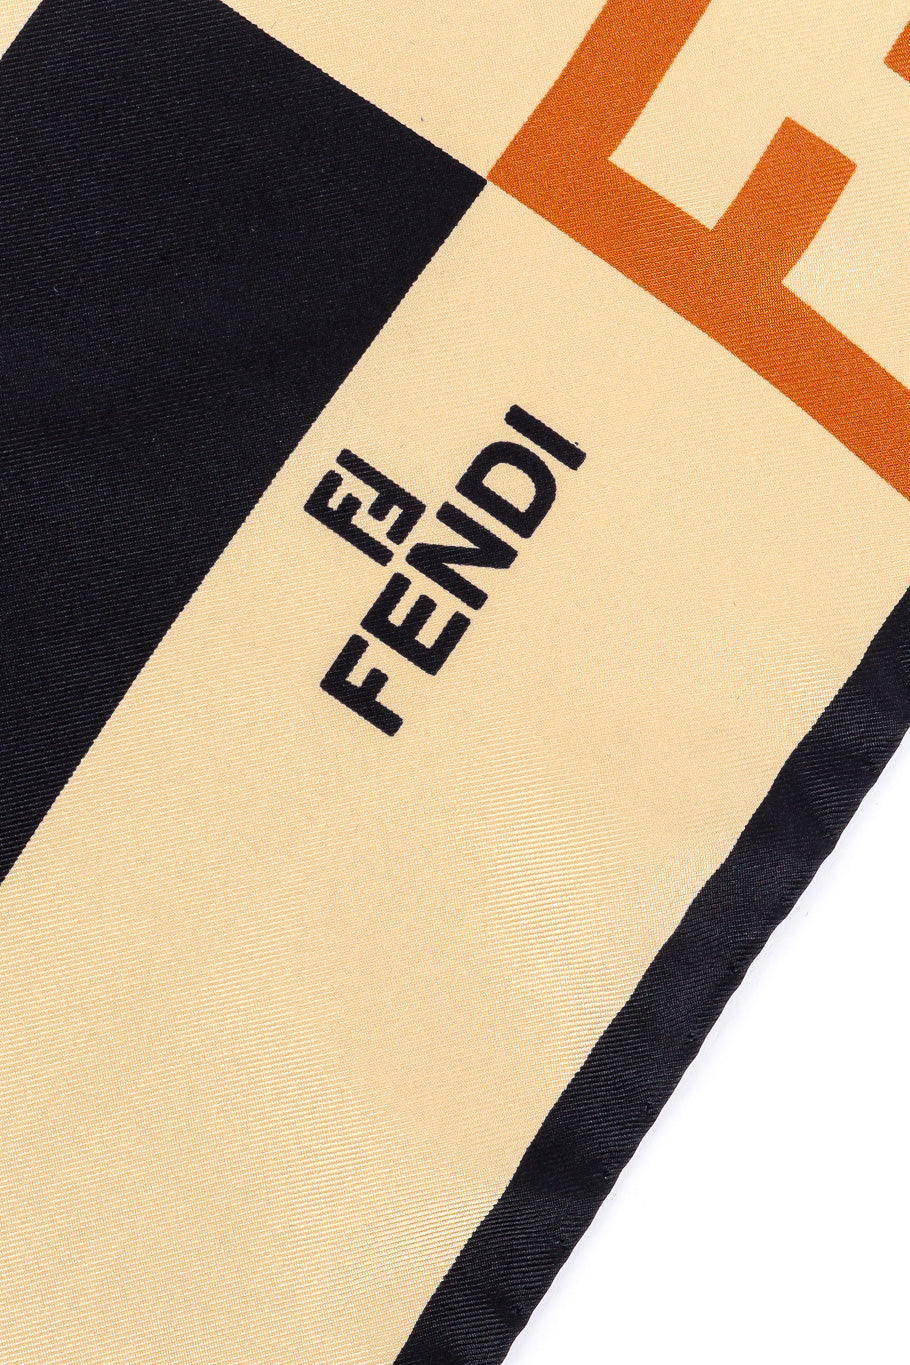 Retro print graphic scarf by Fendi Photo Monogram Details. @recessla